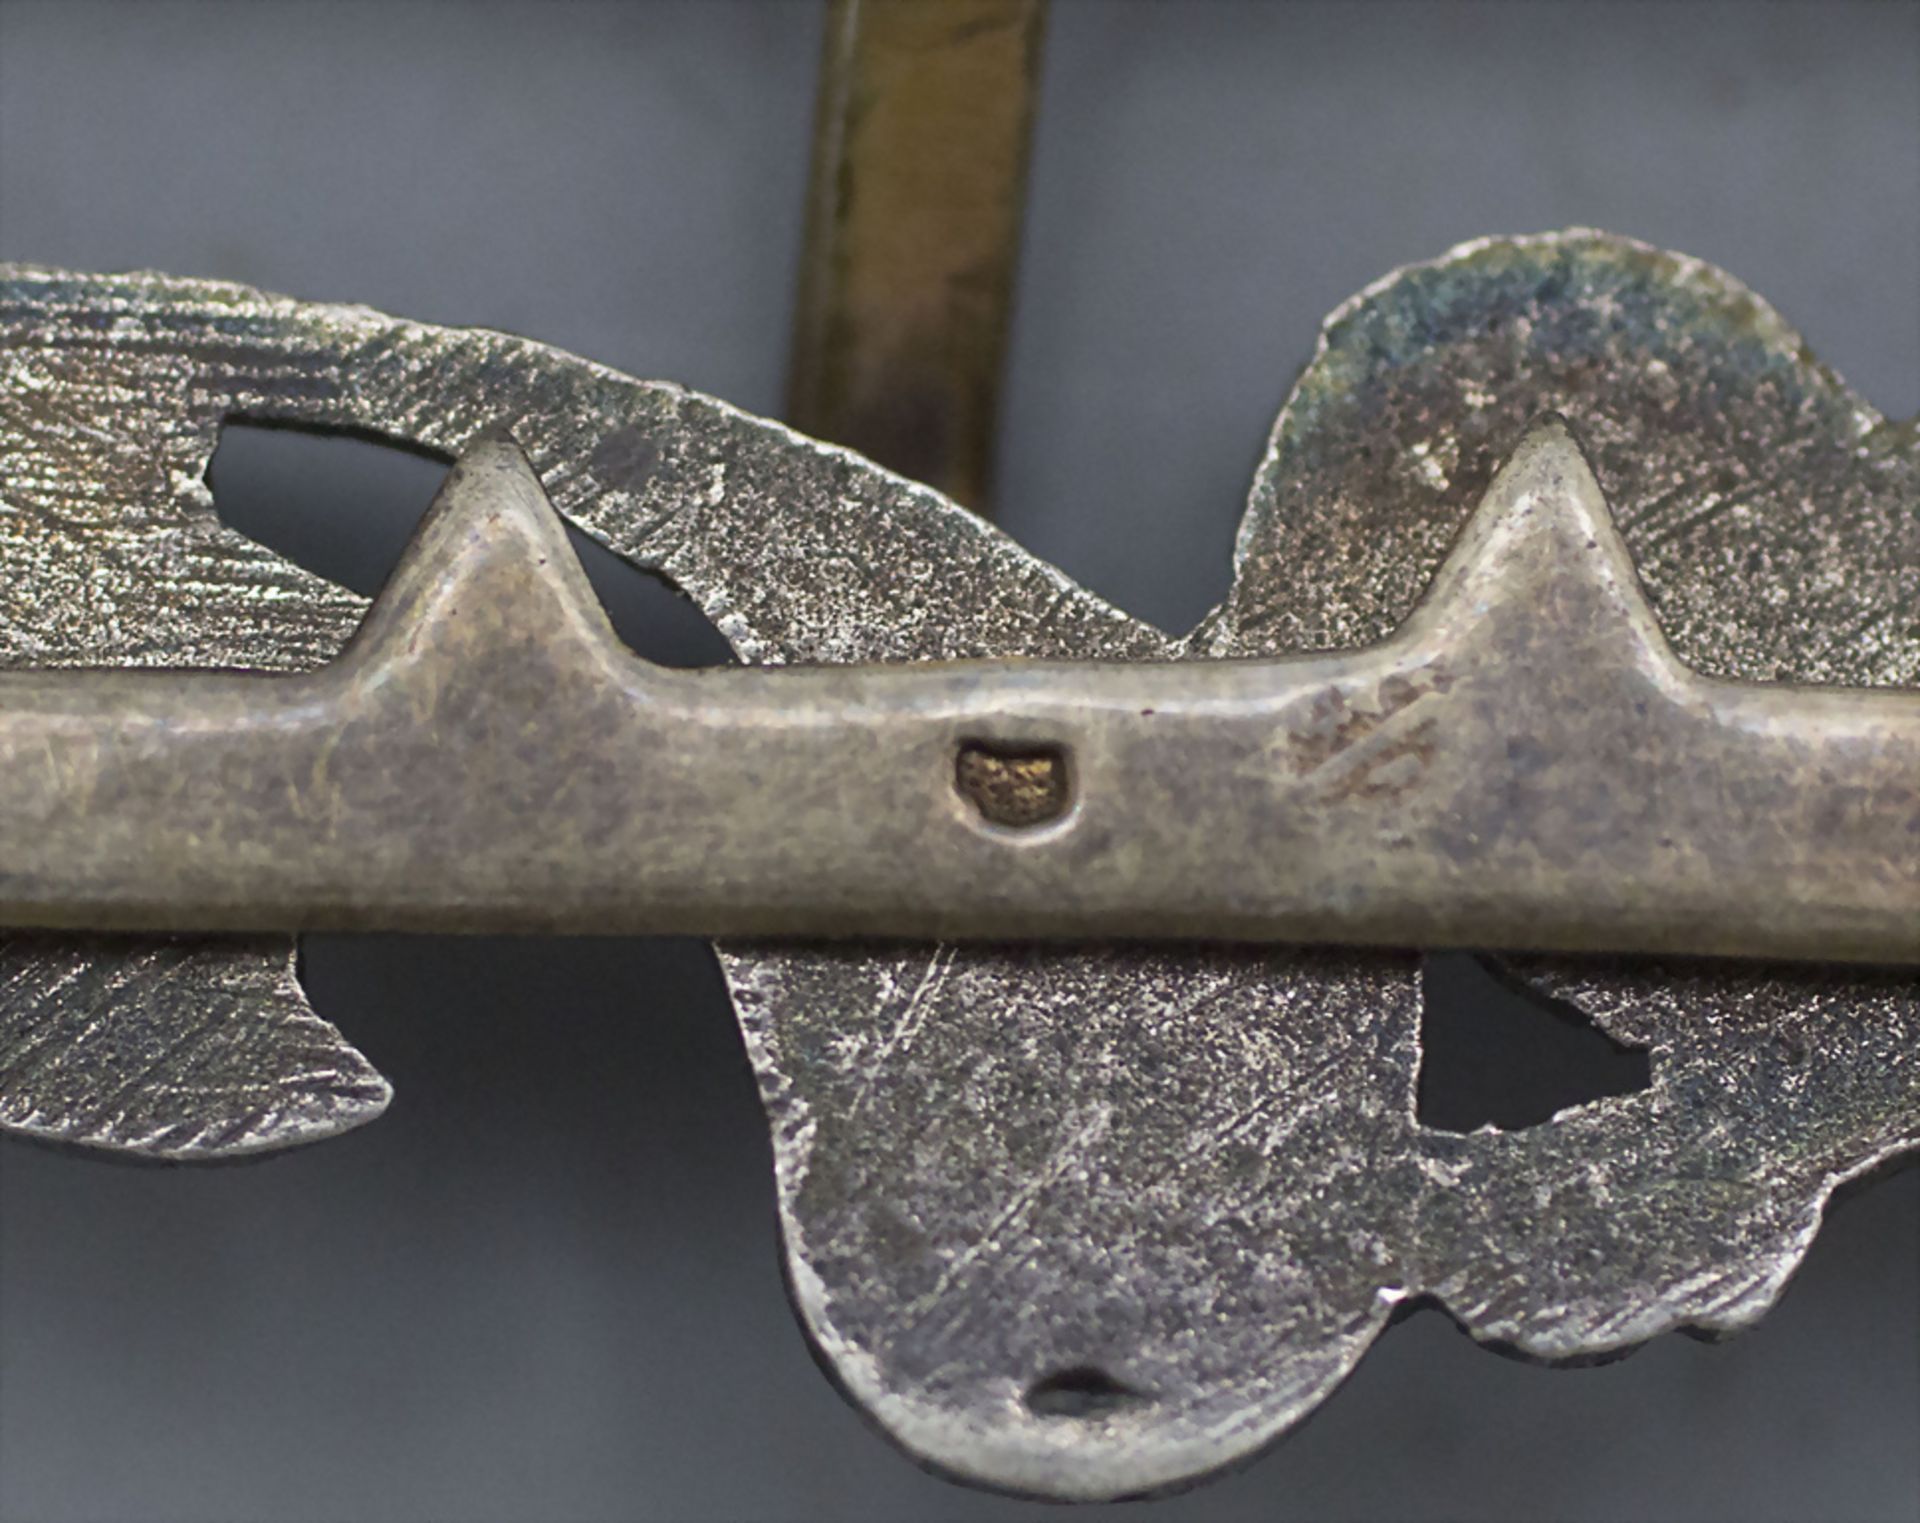 Silber Gürtelschließe / A silver belt buckle, Frankreich, 2. Hälfte 19. Jh. - Image 3 of 3